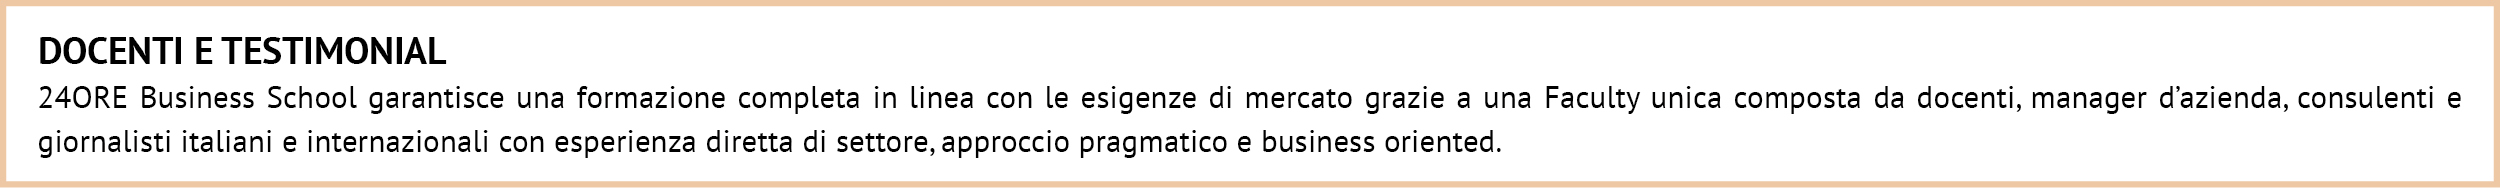 Immagine Sales Management | Euroconference